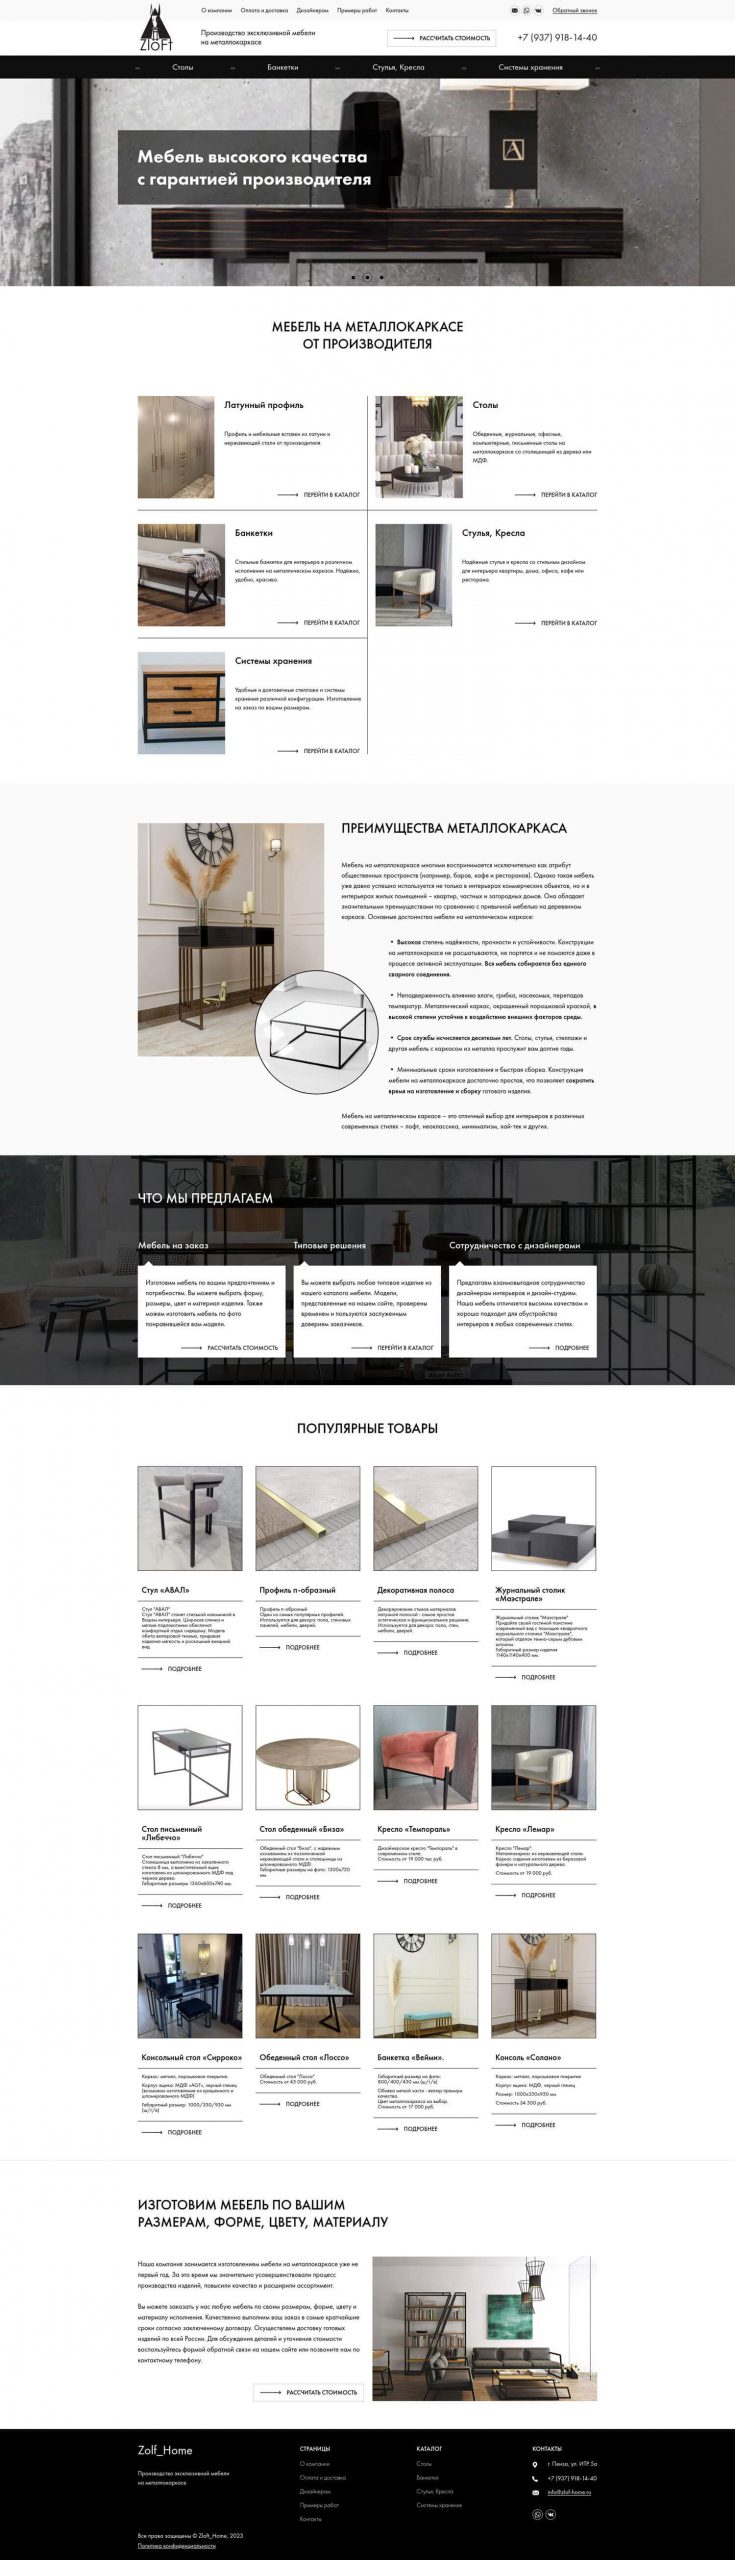 Сайт производства мебели на металлокаркасе